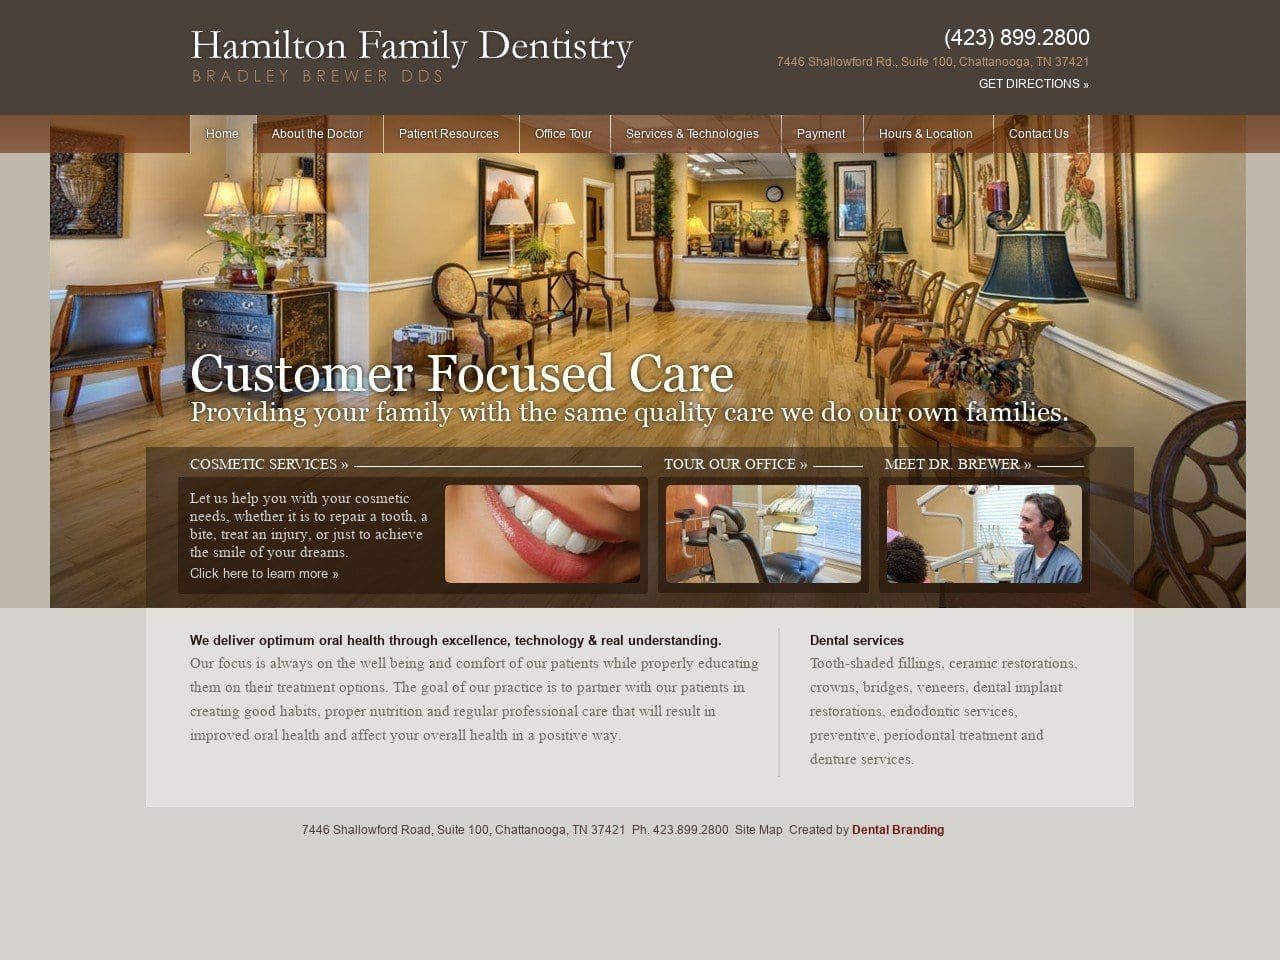 Hamilton Family Dentist Website Screenshot from bradleybrewerdds.com